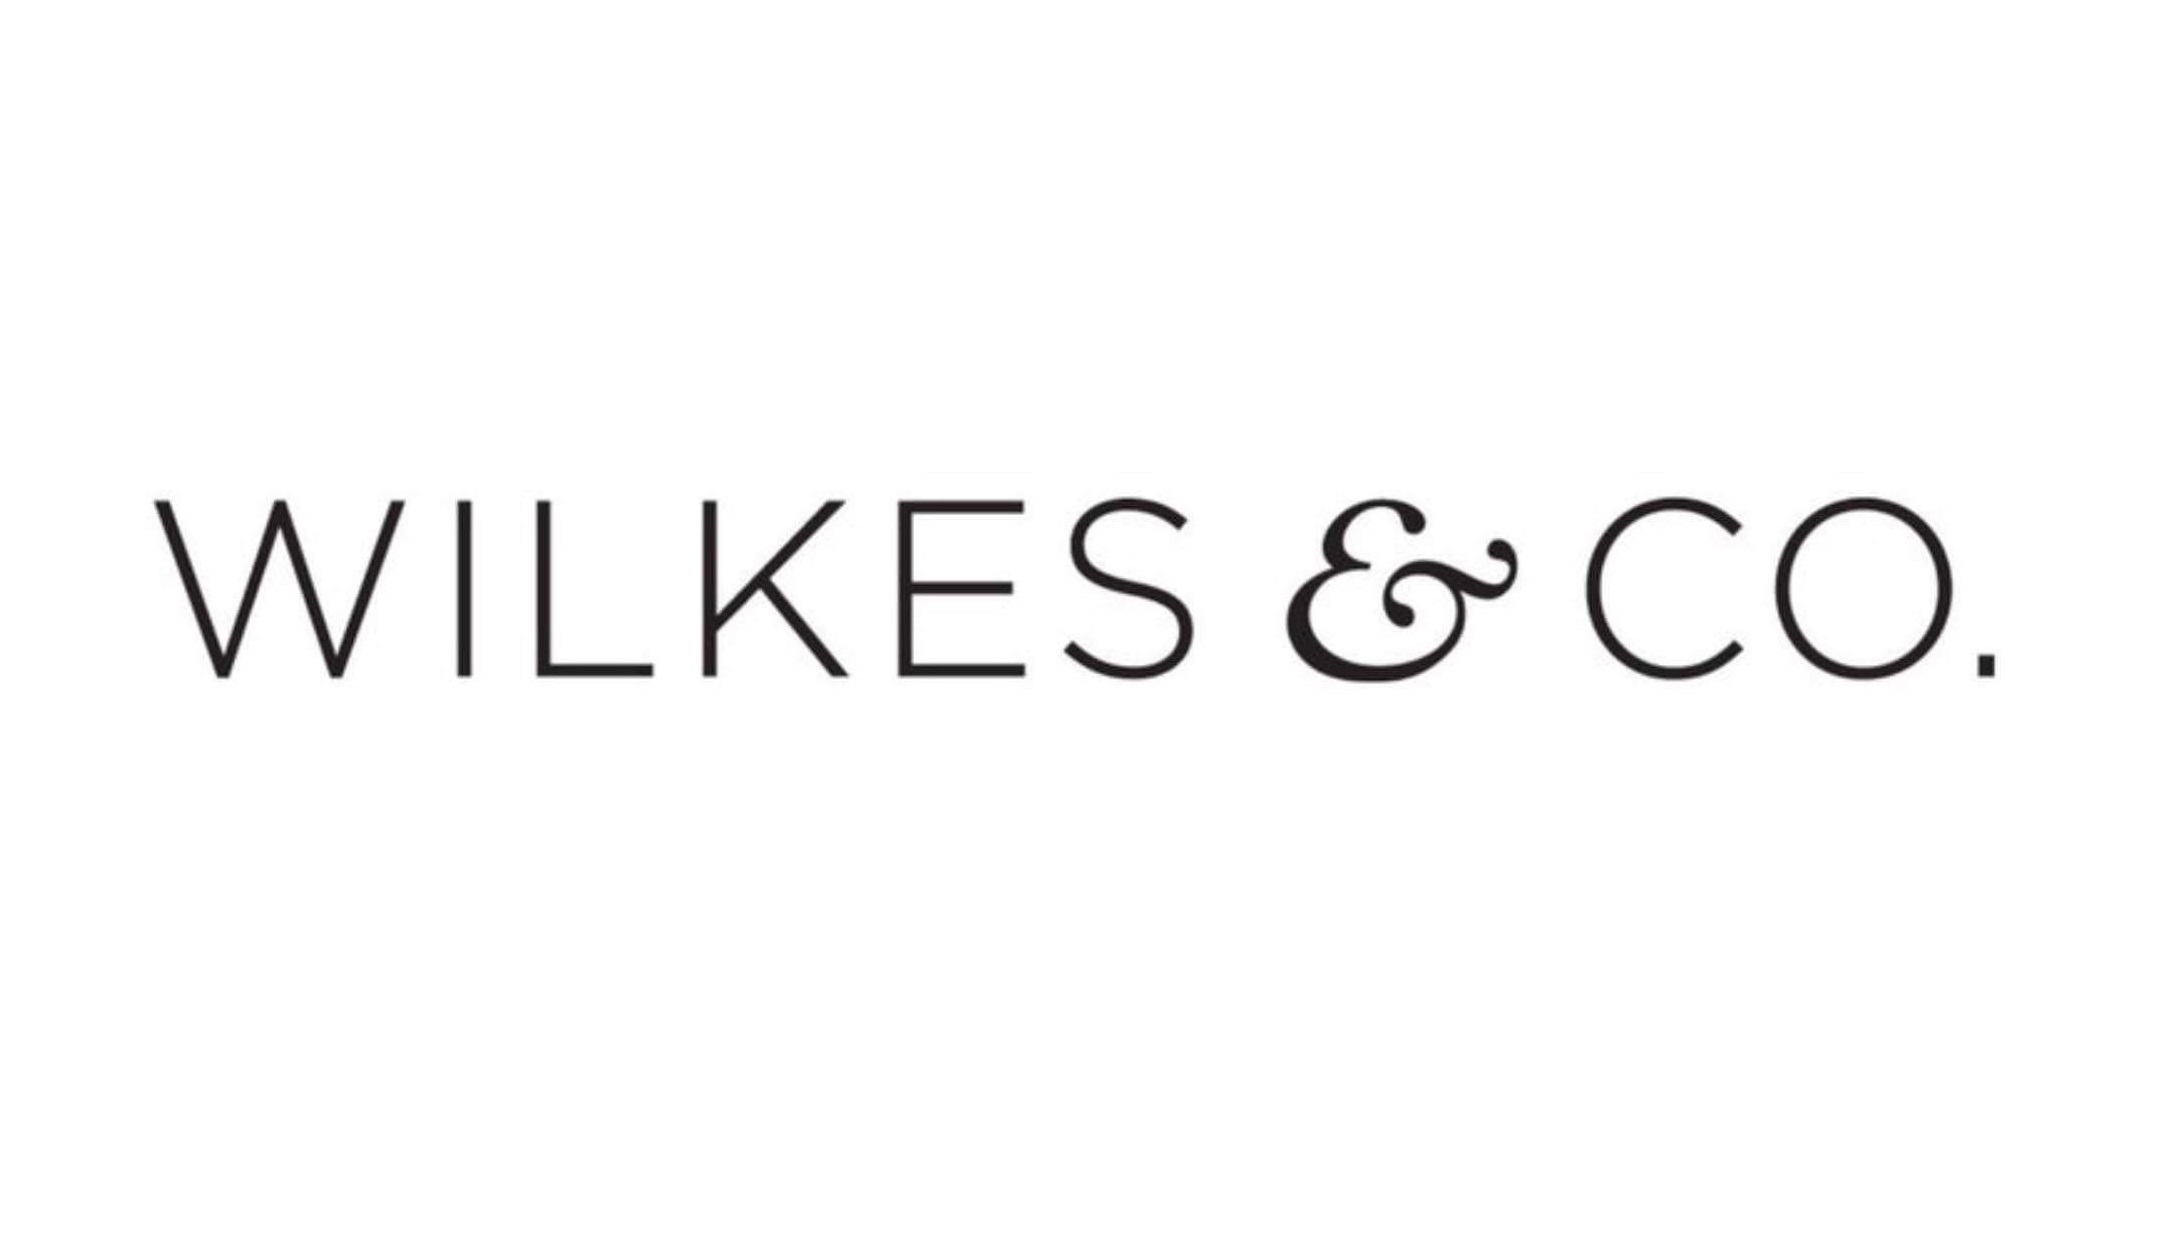 Wilkes & Co